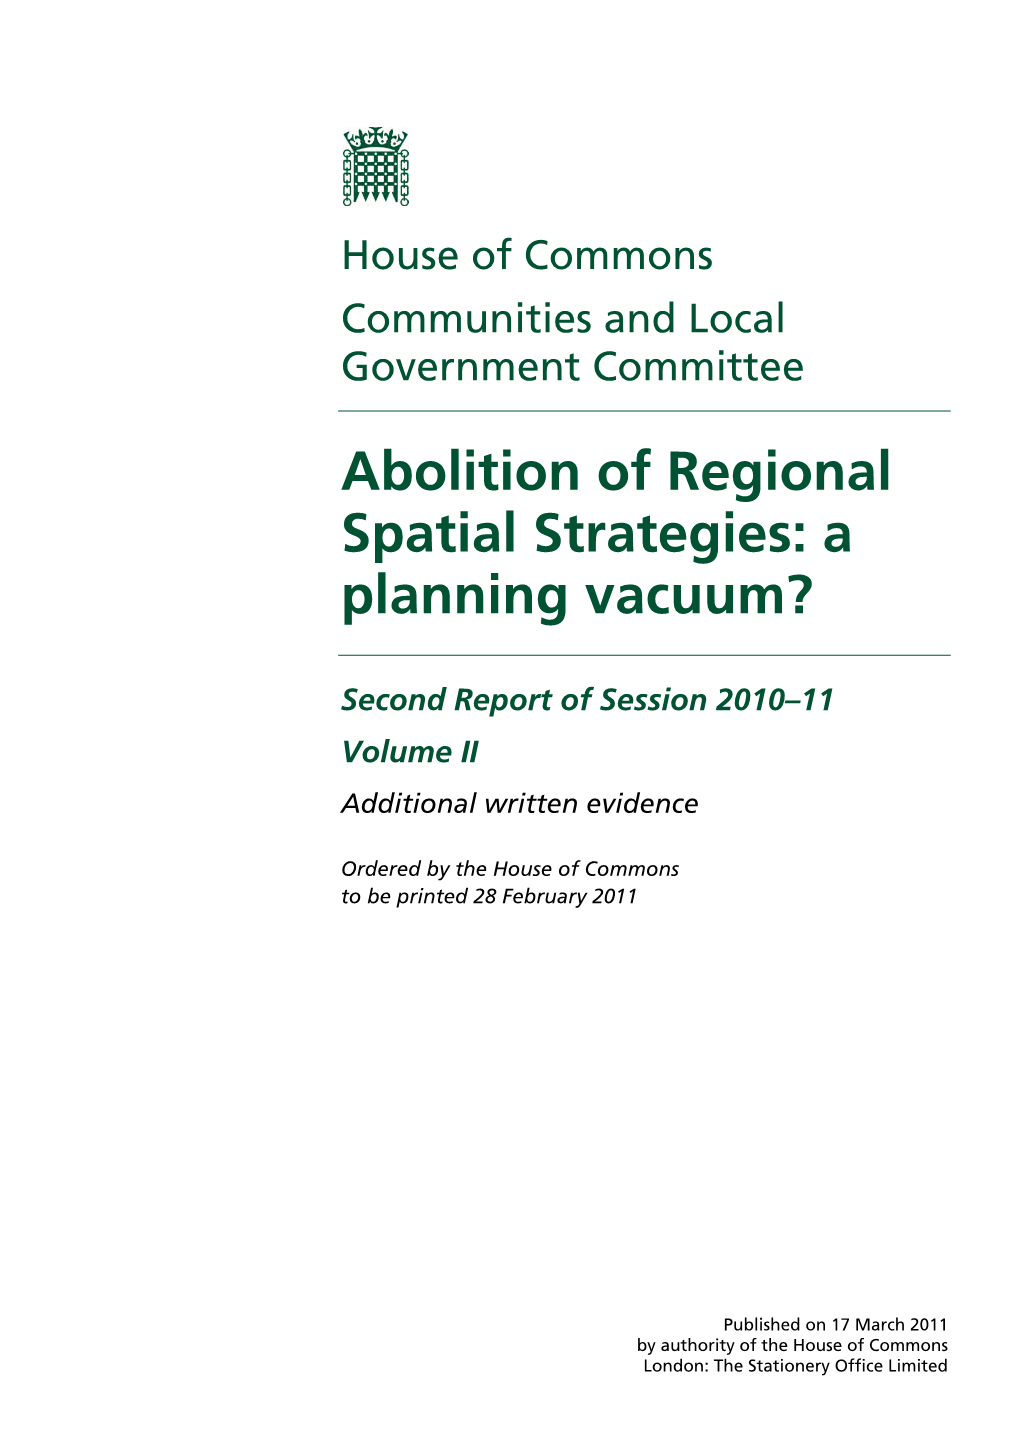 Abolition of Regional Spatial Strategies: a Planning Vacuum?